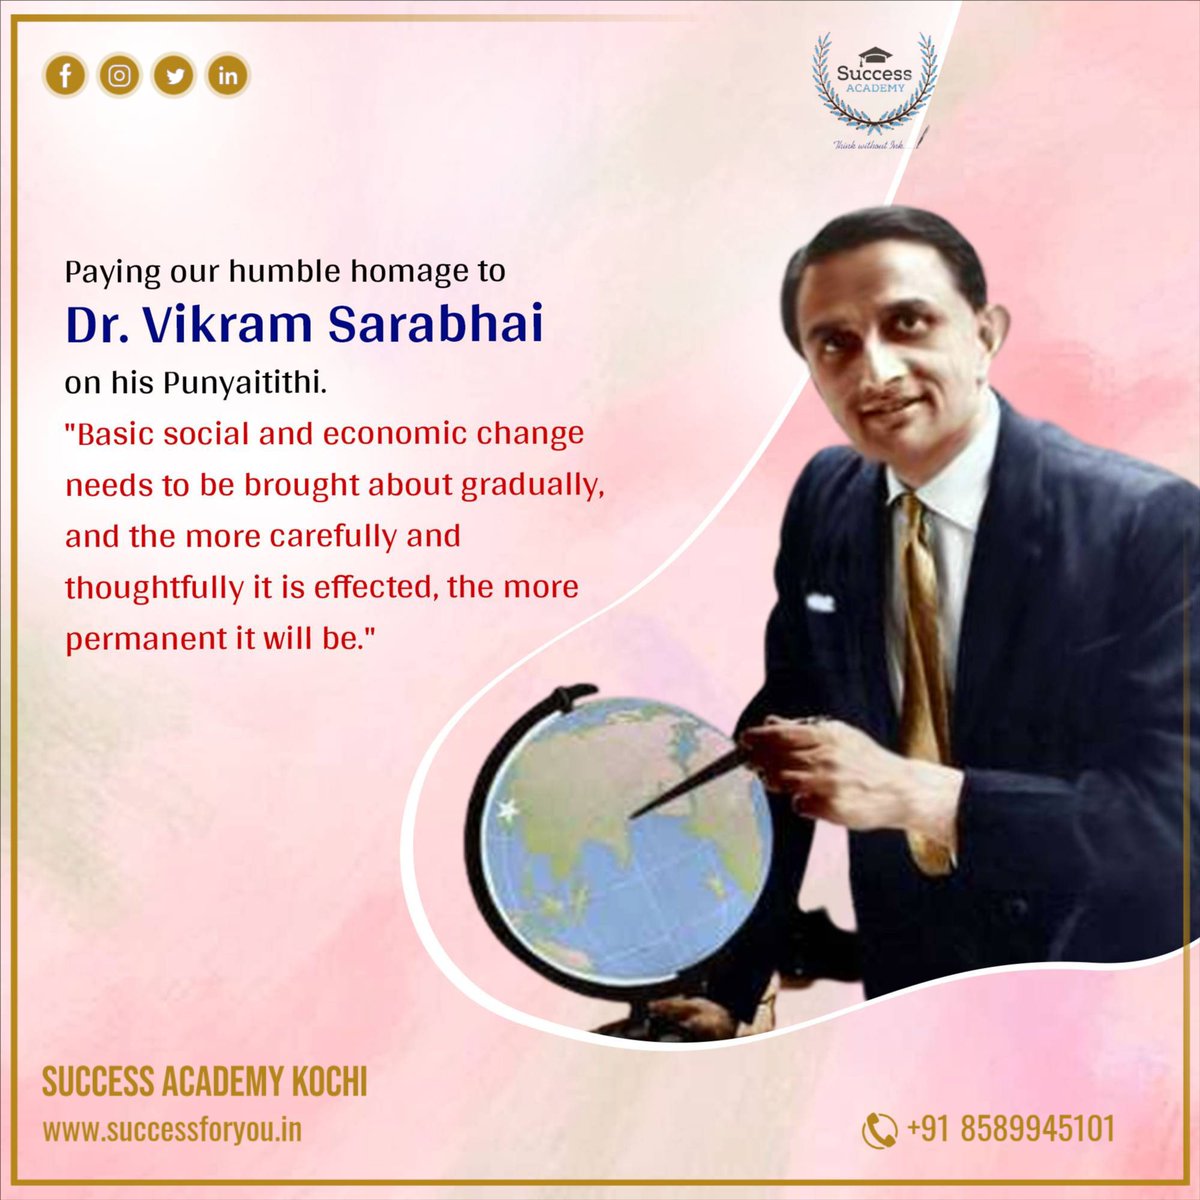 #VikramSarabhai #SarabhaiPunyatithi #SpaceVisionary #RememberingVikramSarabhai
#ISROFounder #SpacePioneer #IndianSpaceLegend
#SpaceScientist #ISRO #VikramSarabhaiLegacy #SSCCoaching #BankCoaching #SuccessAcademyKochi